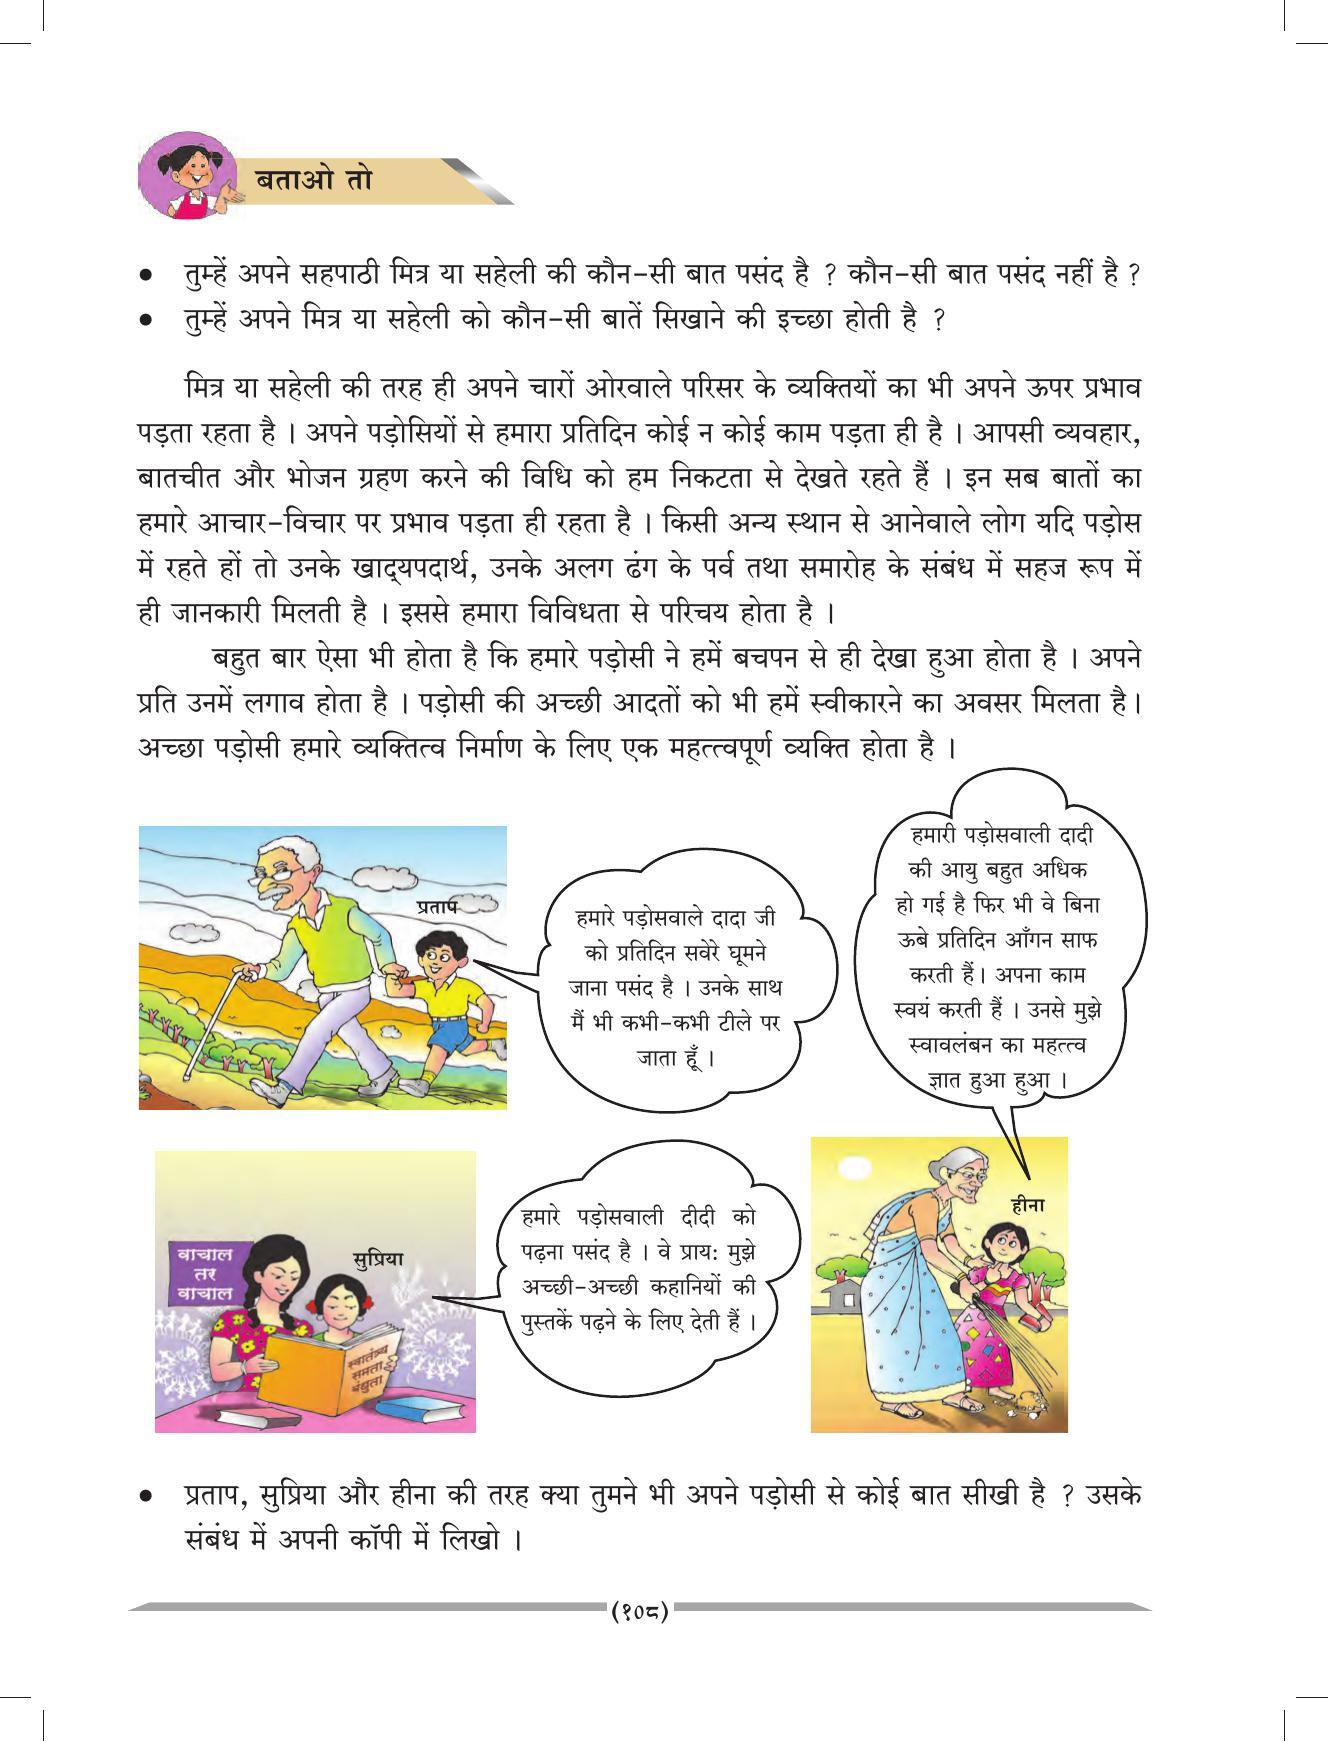 Maharashtra Board Class 4 EVS 1 (Hindi Medium) Textbook - Page 118